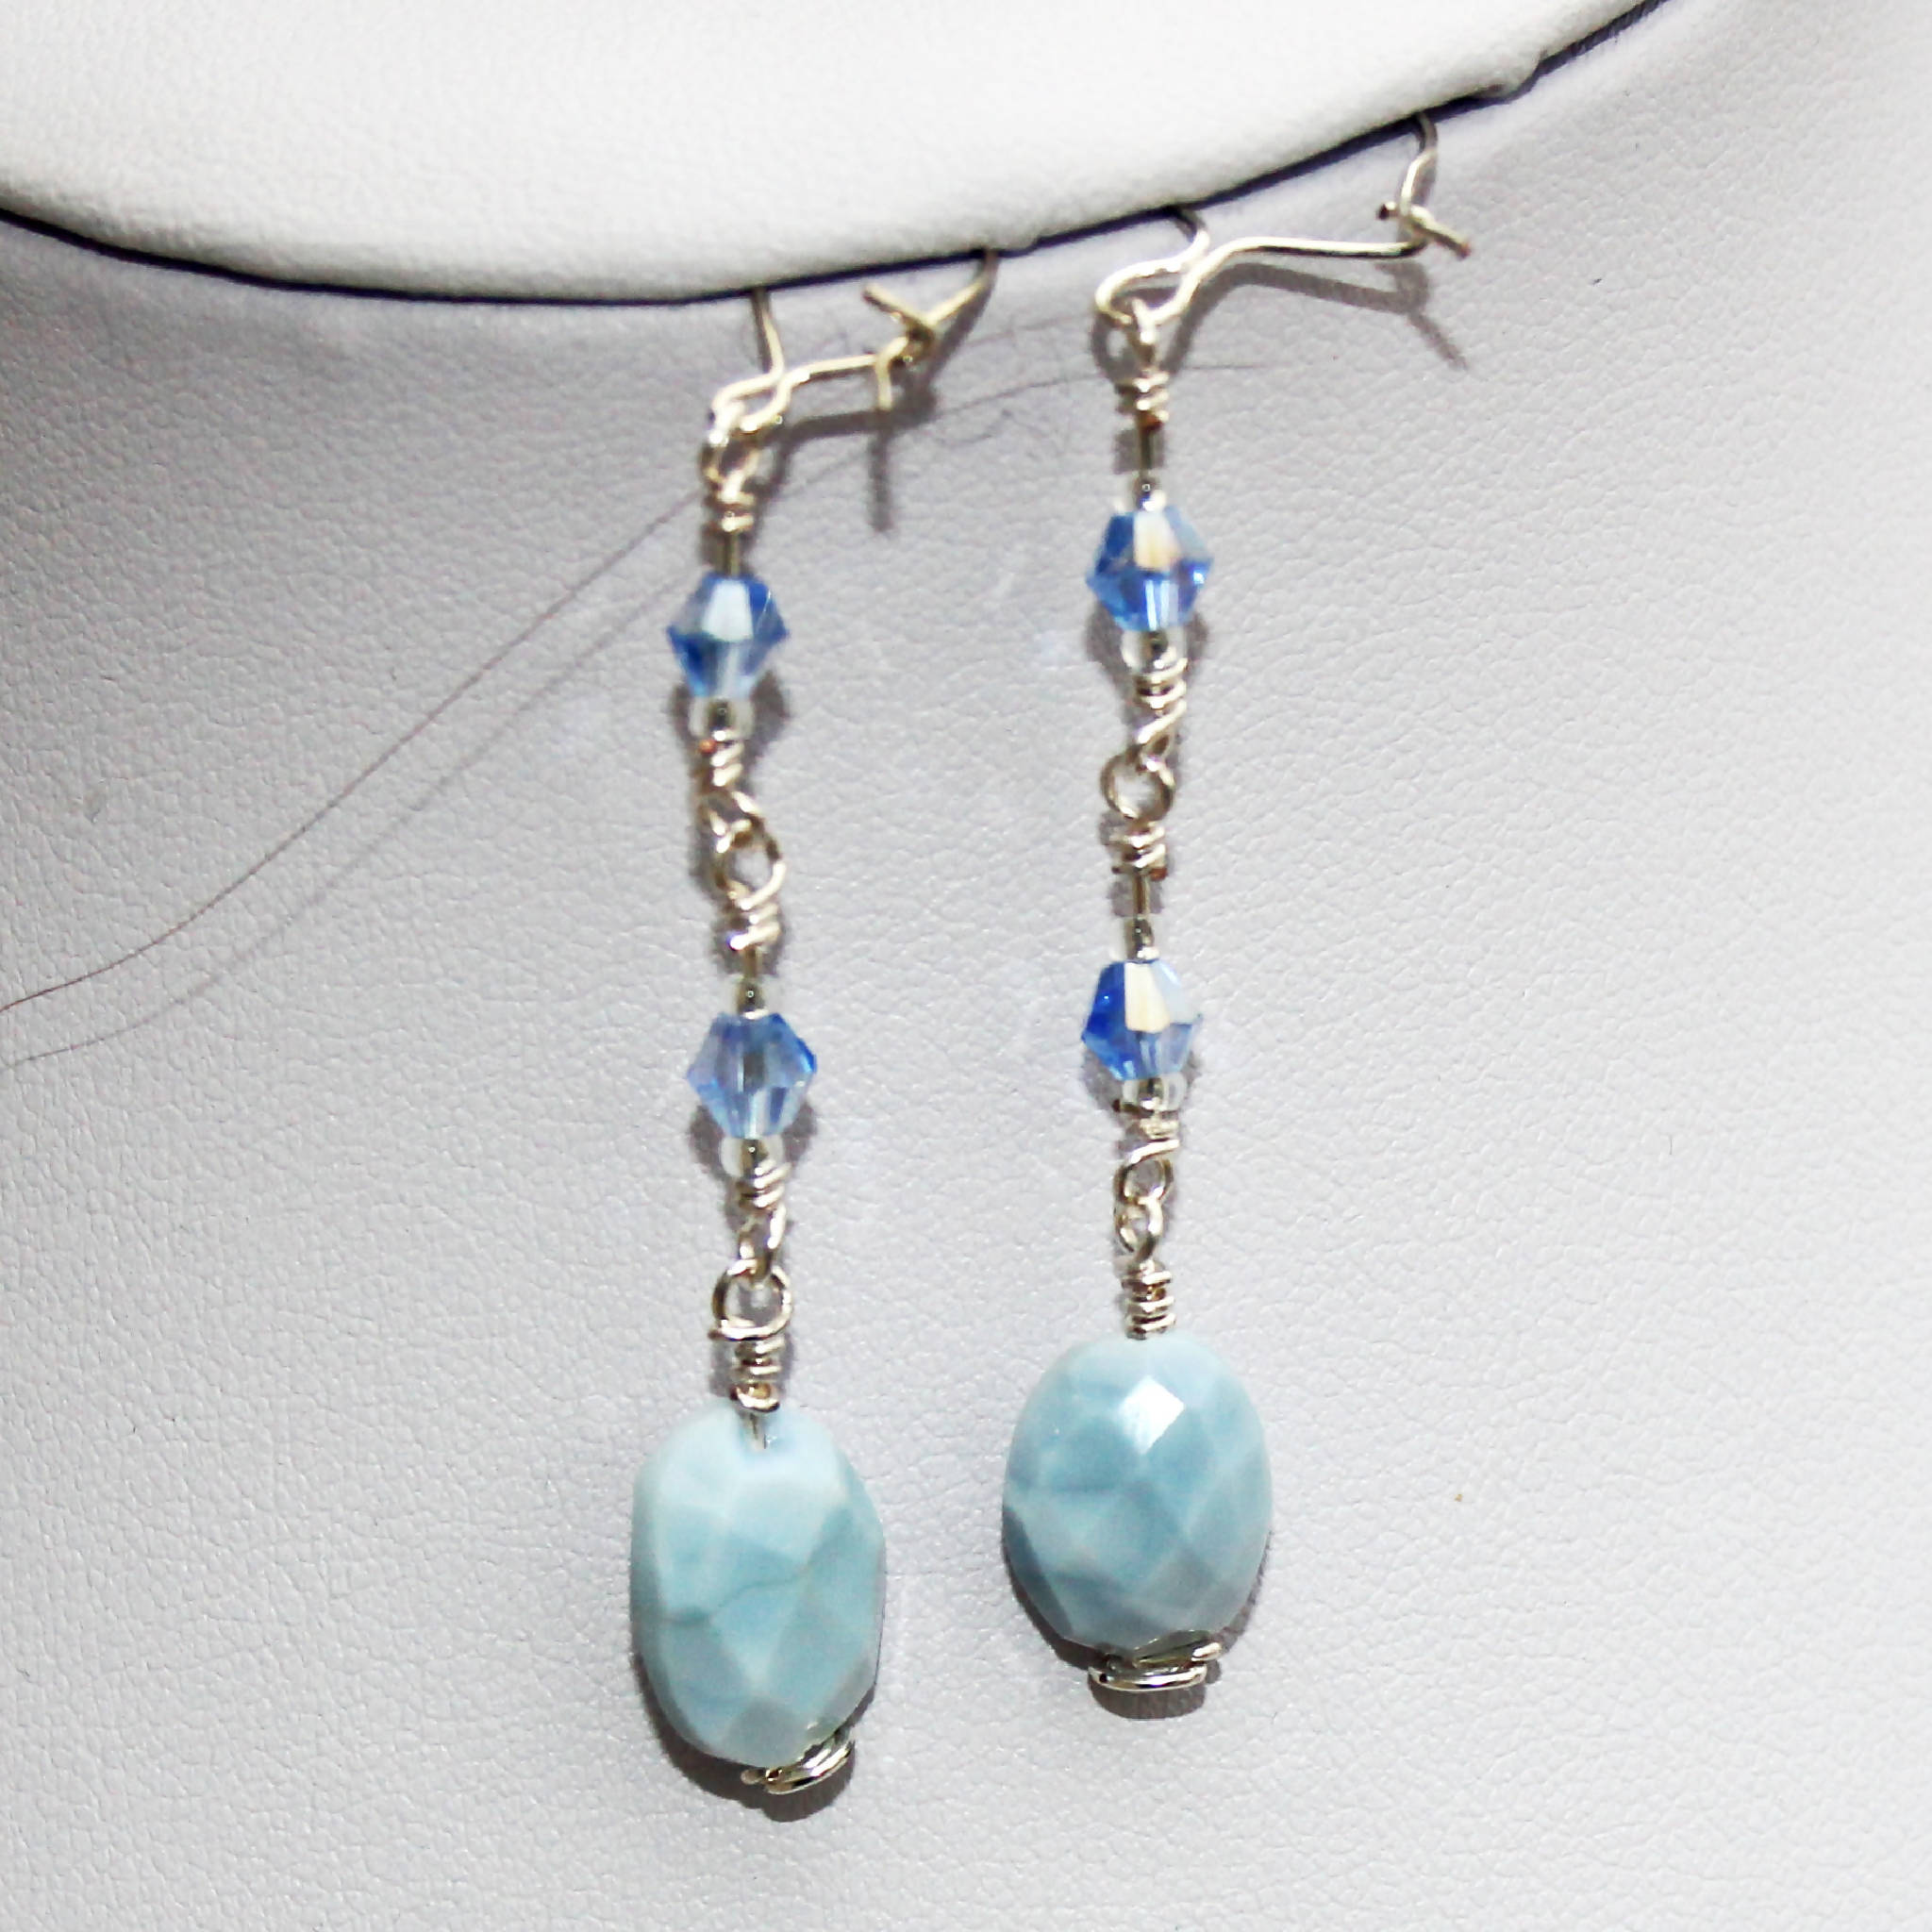 Agate & Swarovski Crystal Necklace & Earring Set (204)